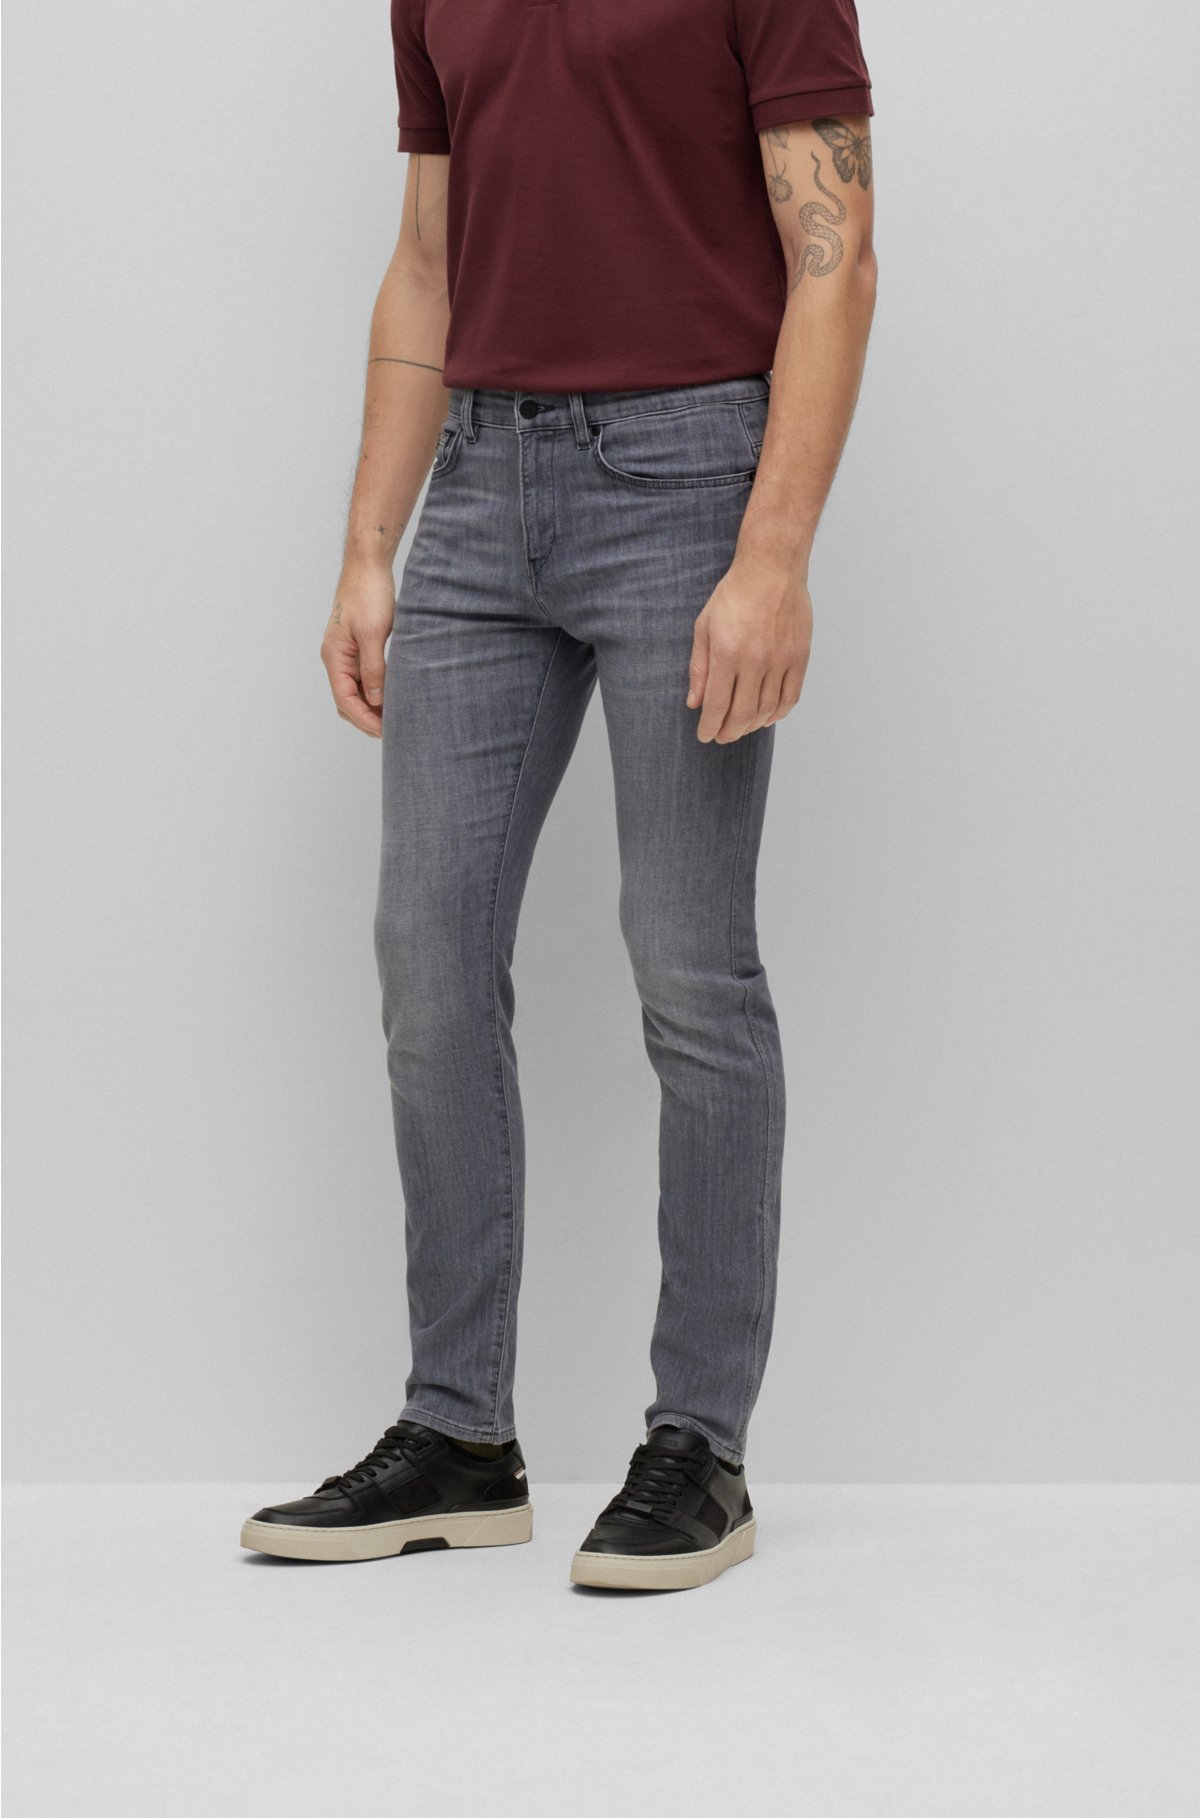 folkeafstemning Anemone fisk Kvadrant BOSS - Slim-fit jeans in gray comfort-stretch denim